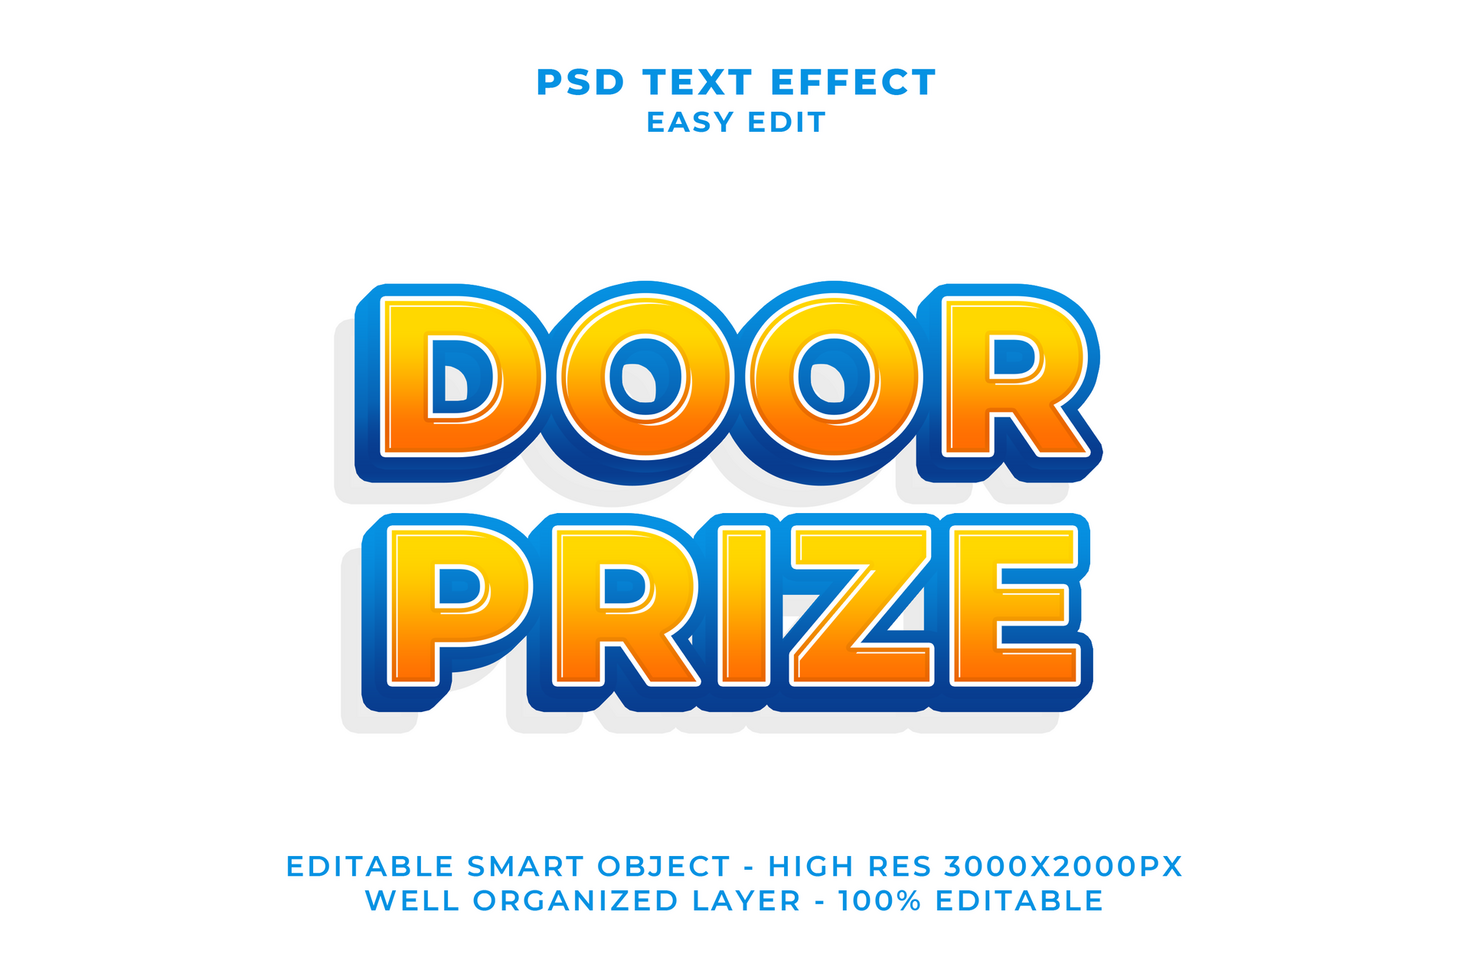 Door Prize cartoon text effect psd